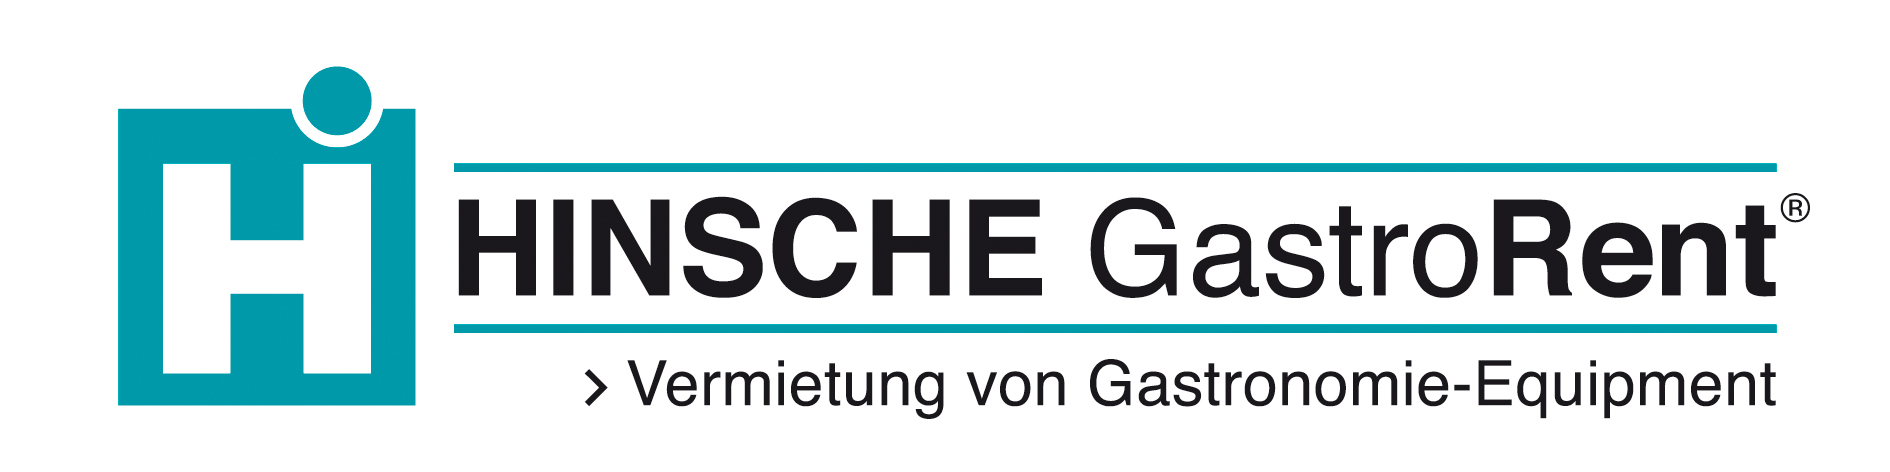 Hinsche GastroRent GmbH